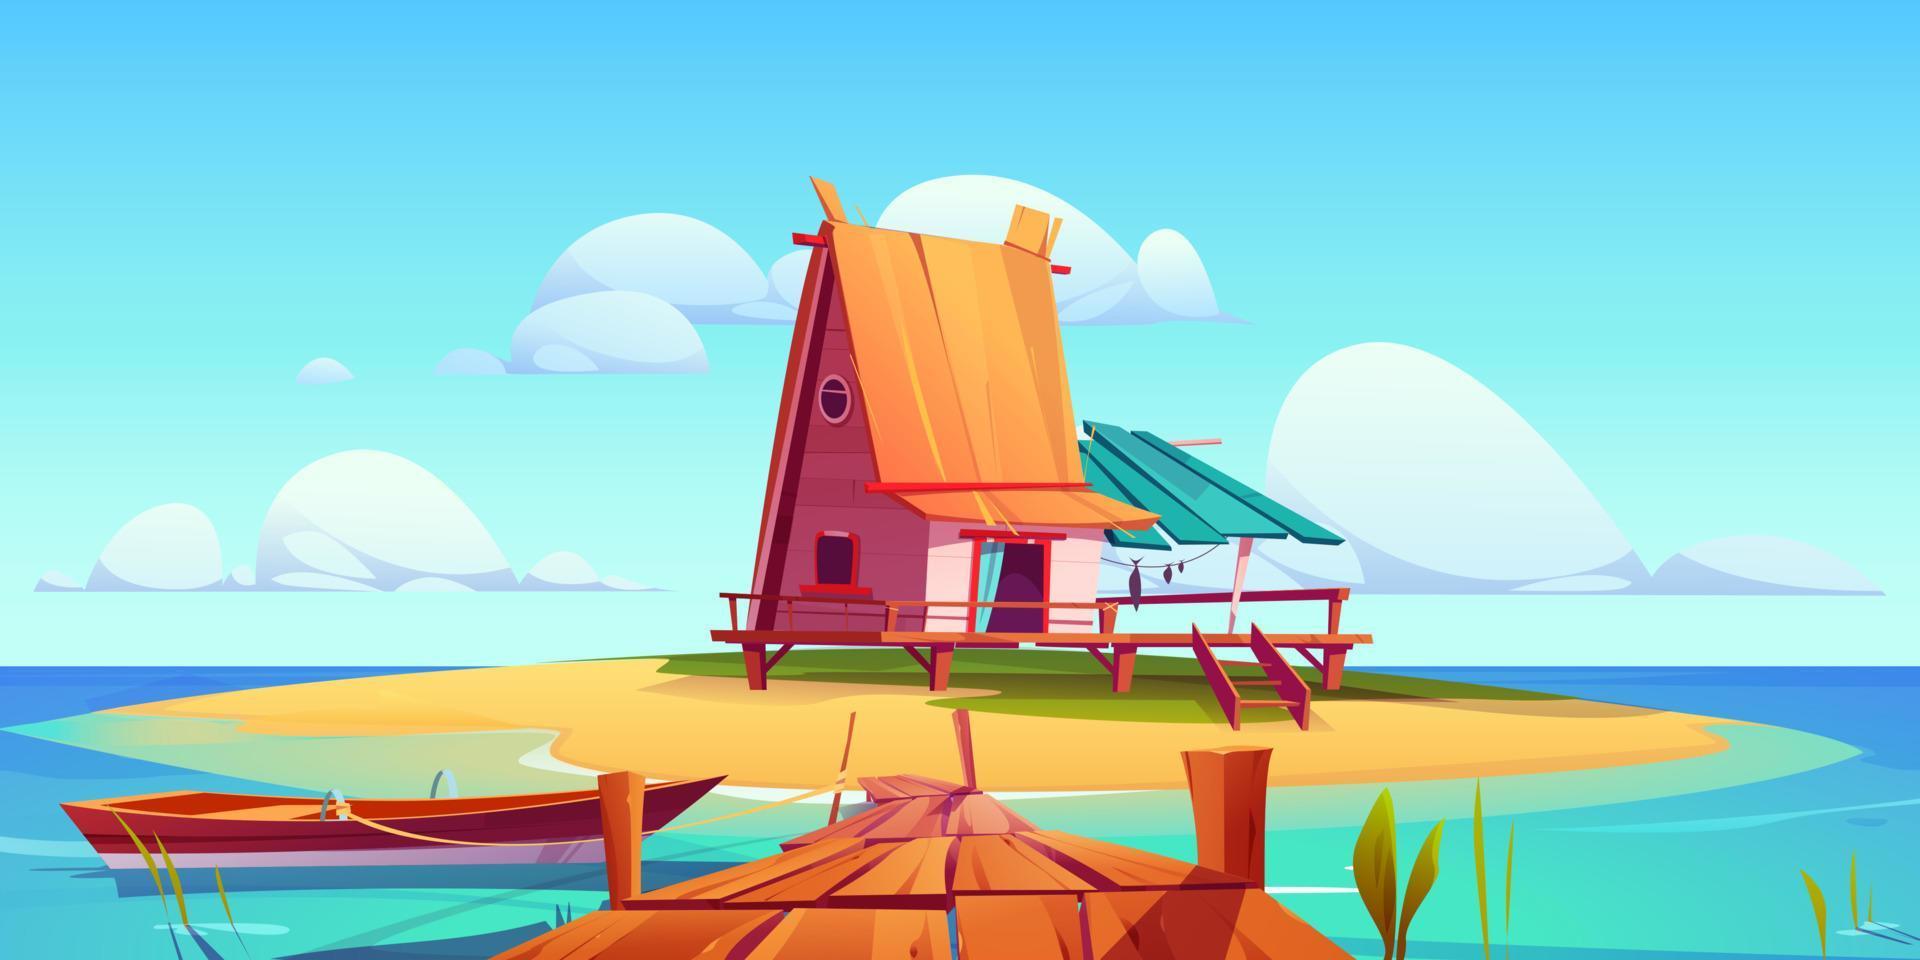 Cartoon scene with small house on island in ocean vector